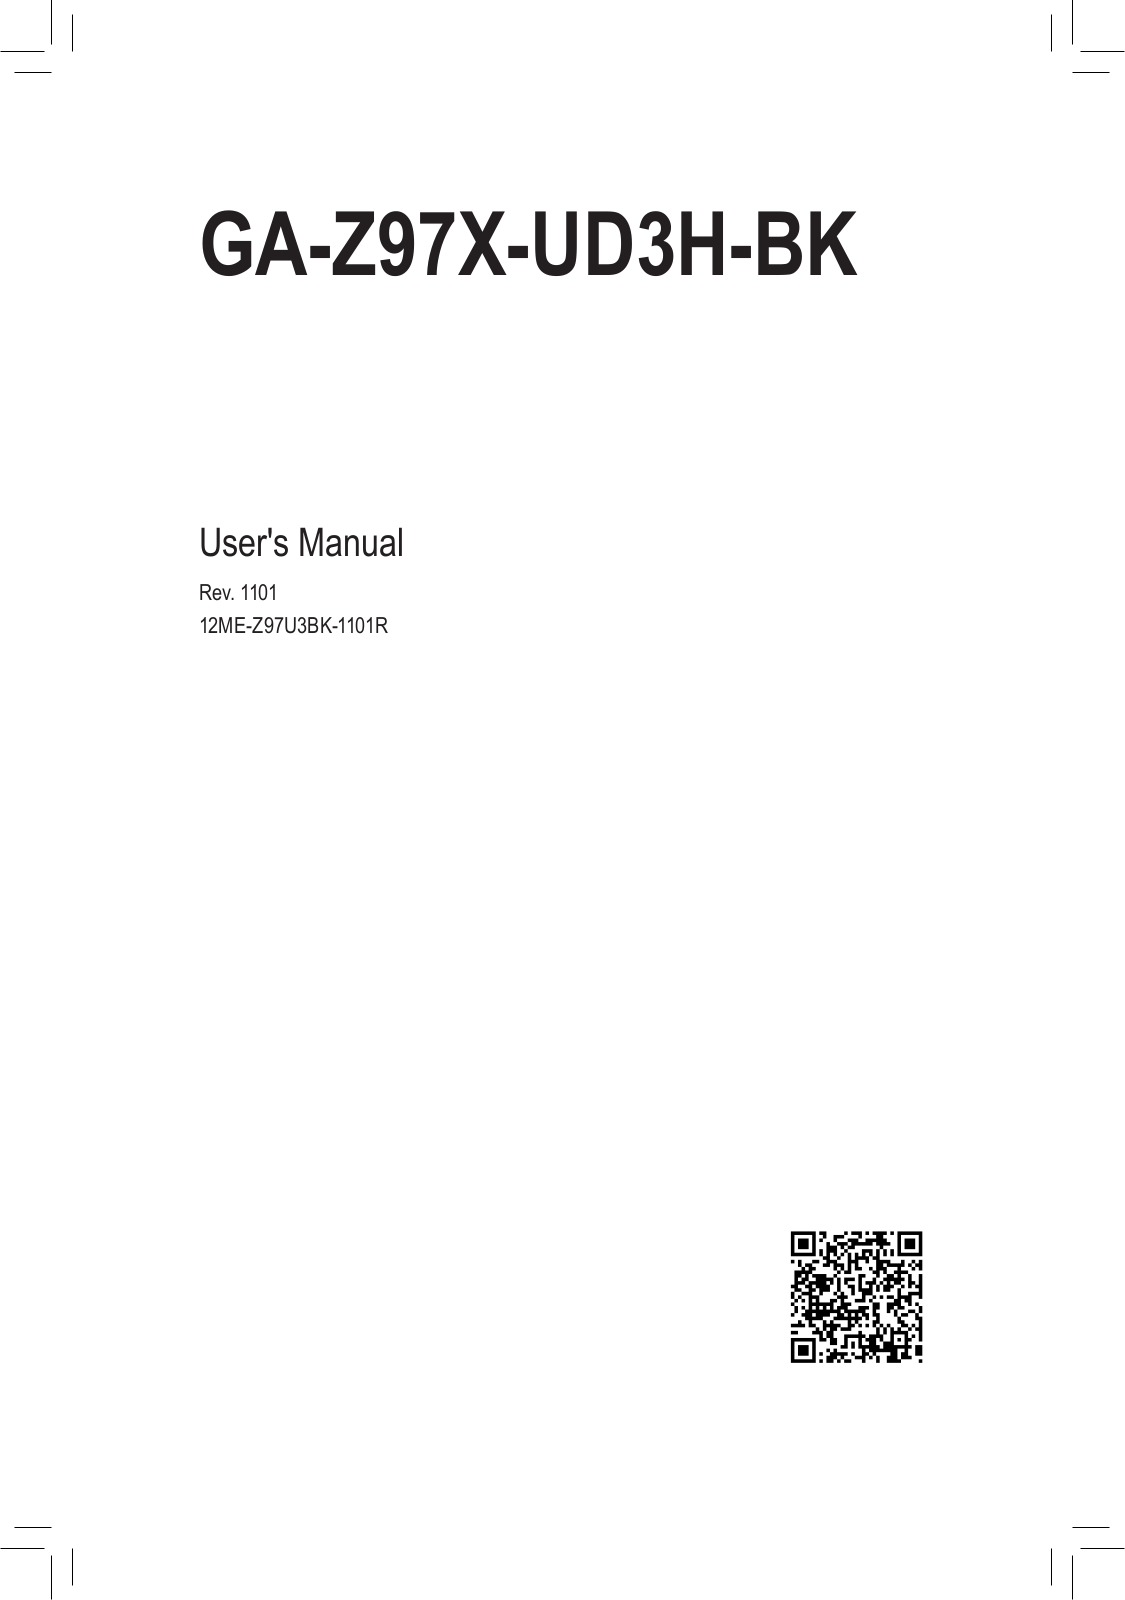 Gigabyte GA-Z97X-UD3H-BK Manual